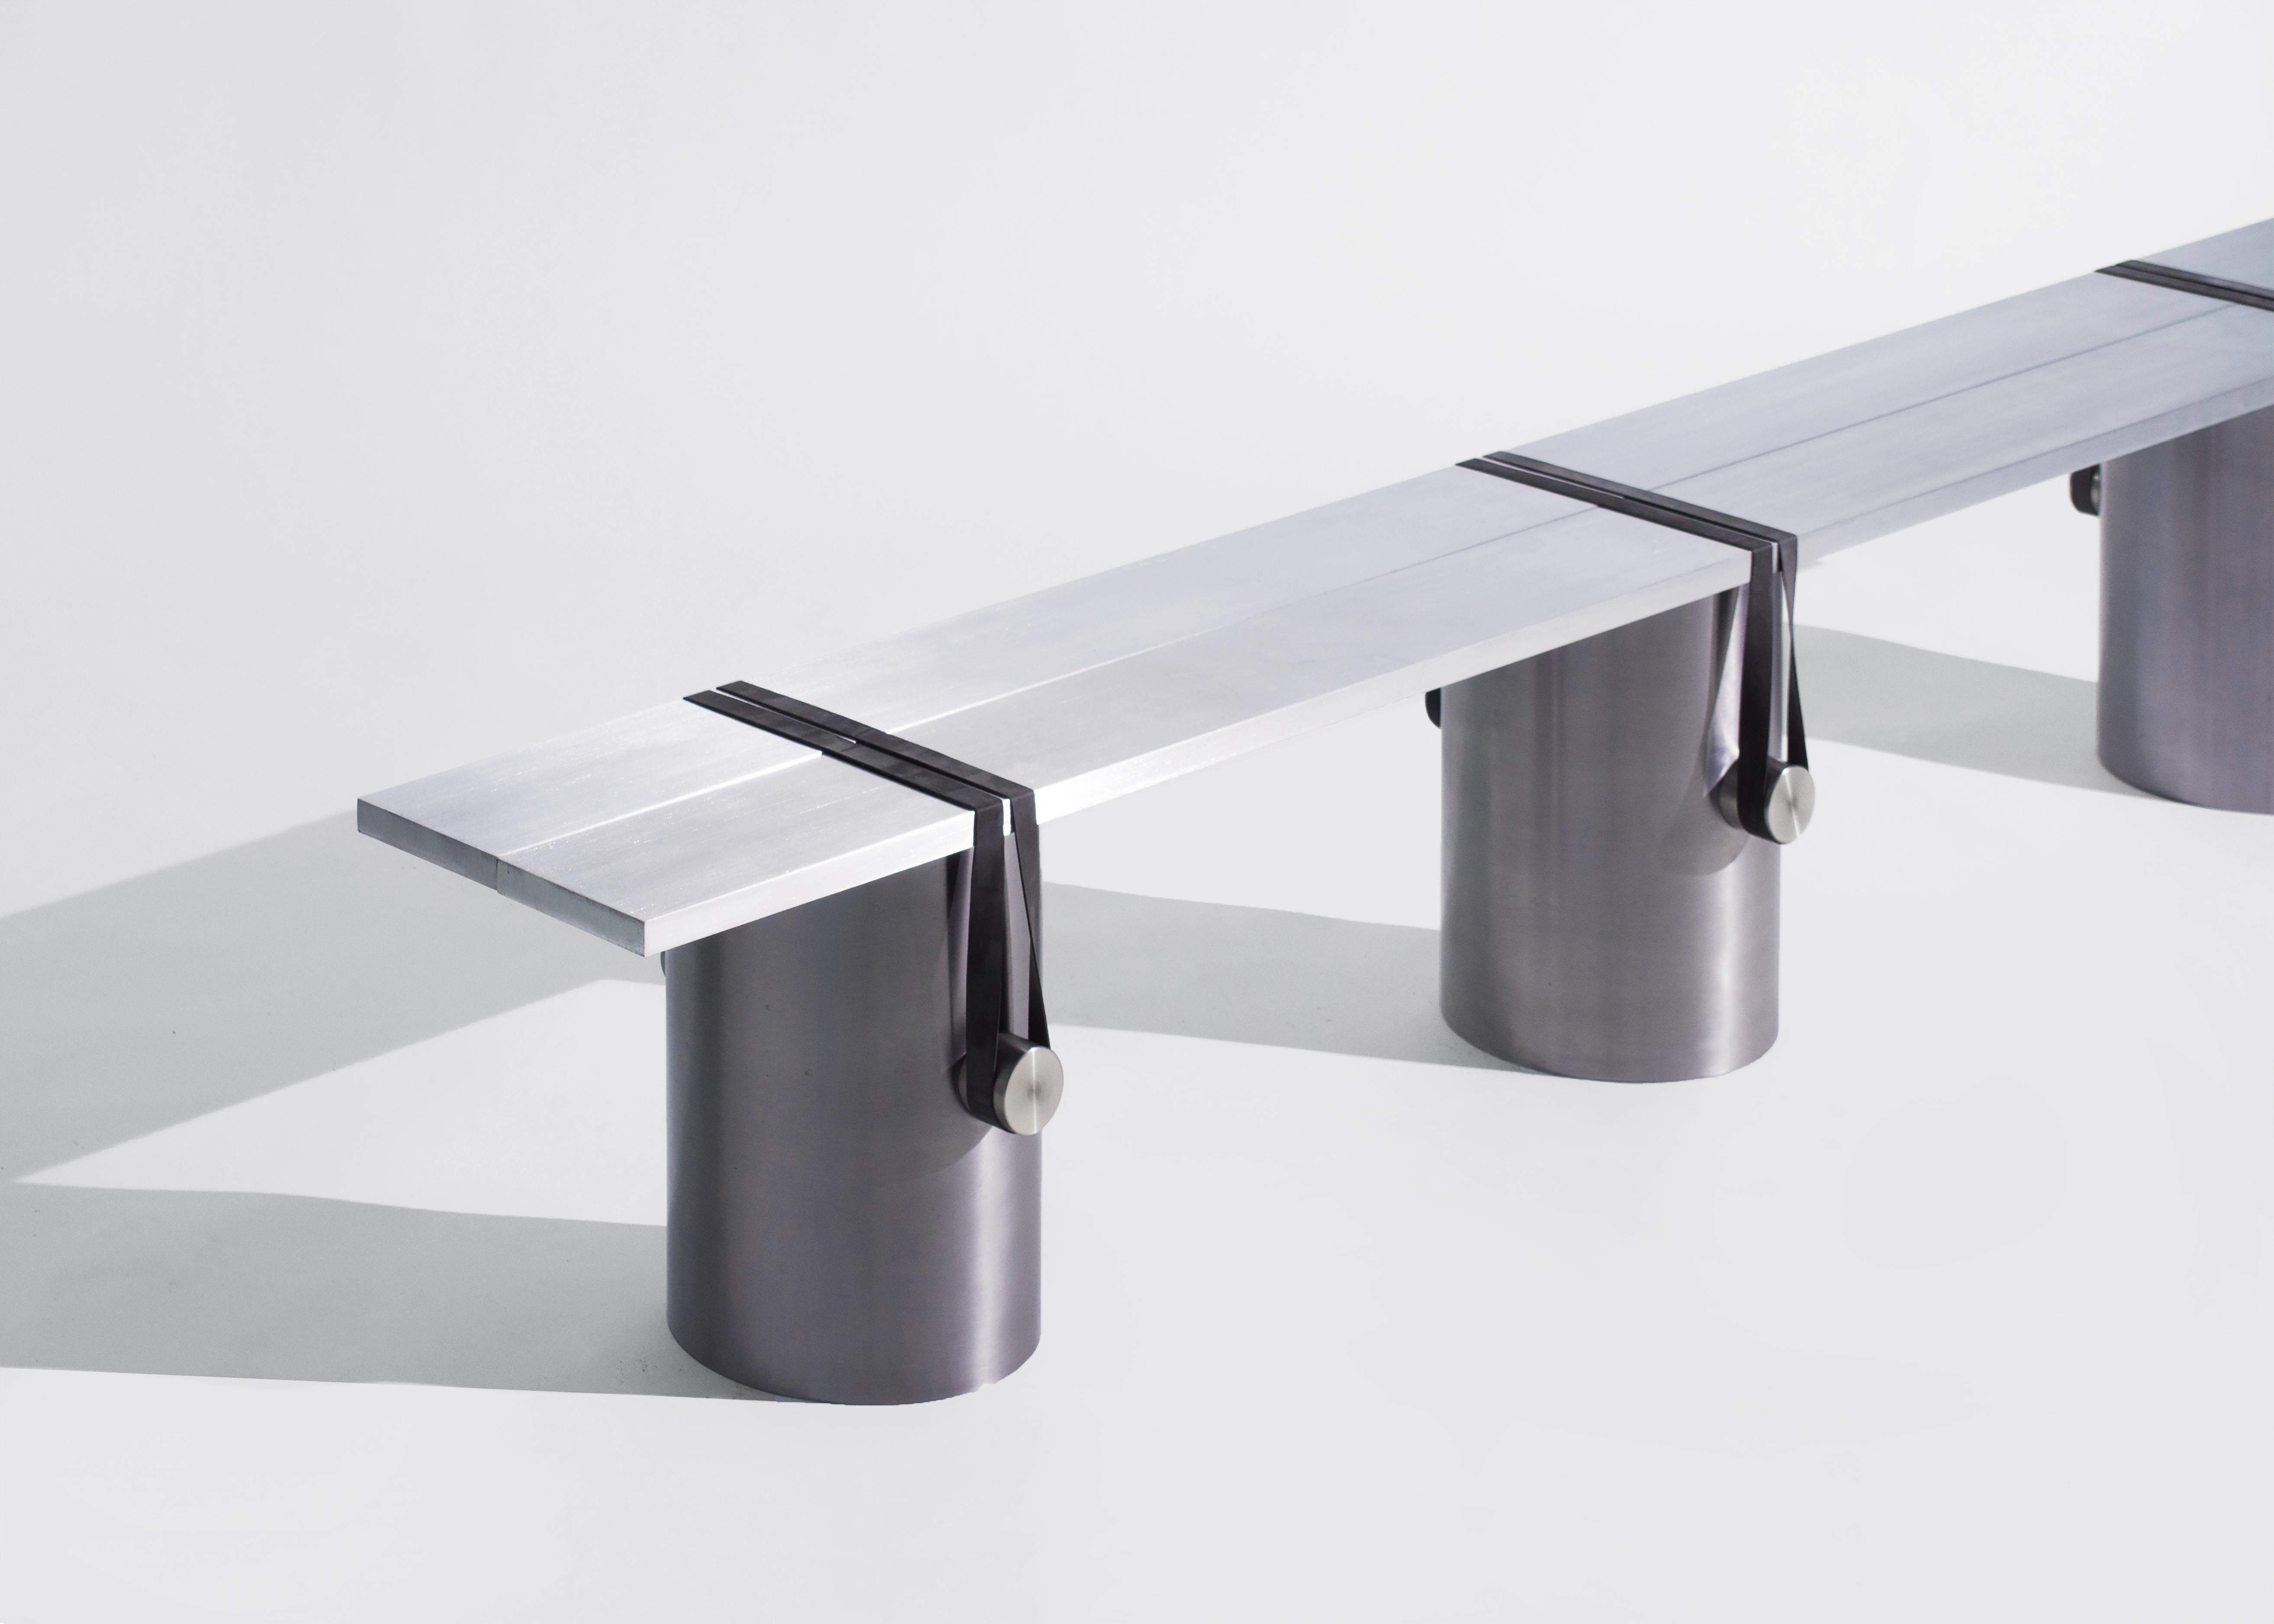 Dutch Stainless Steel Contemporary Bench by Johan Viladrich